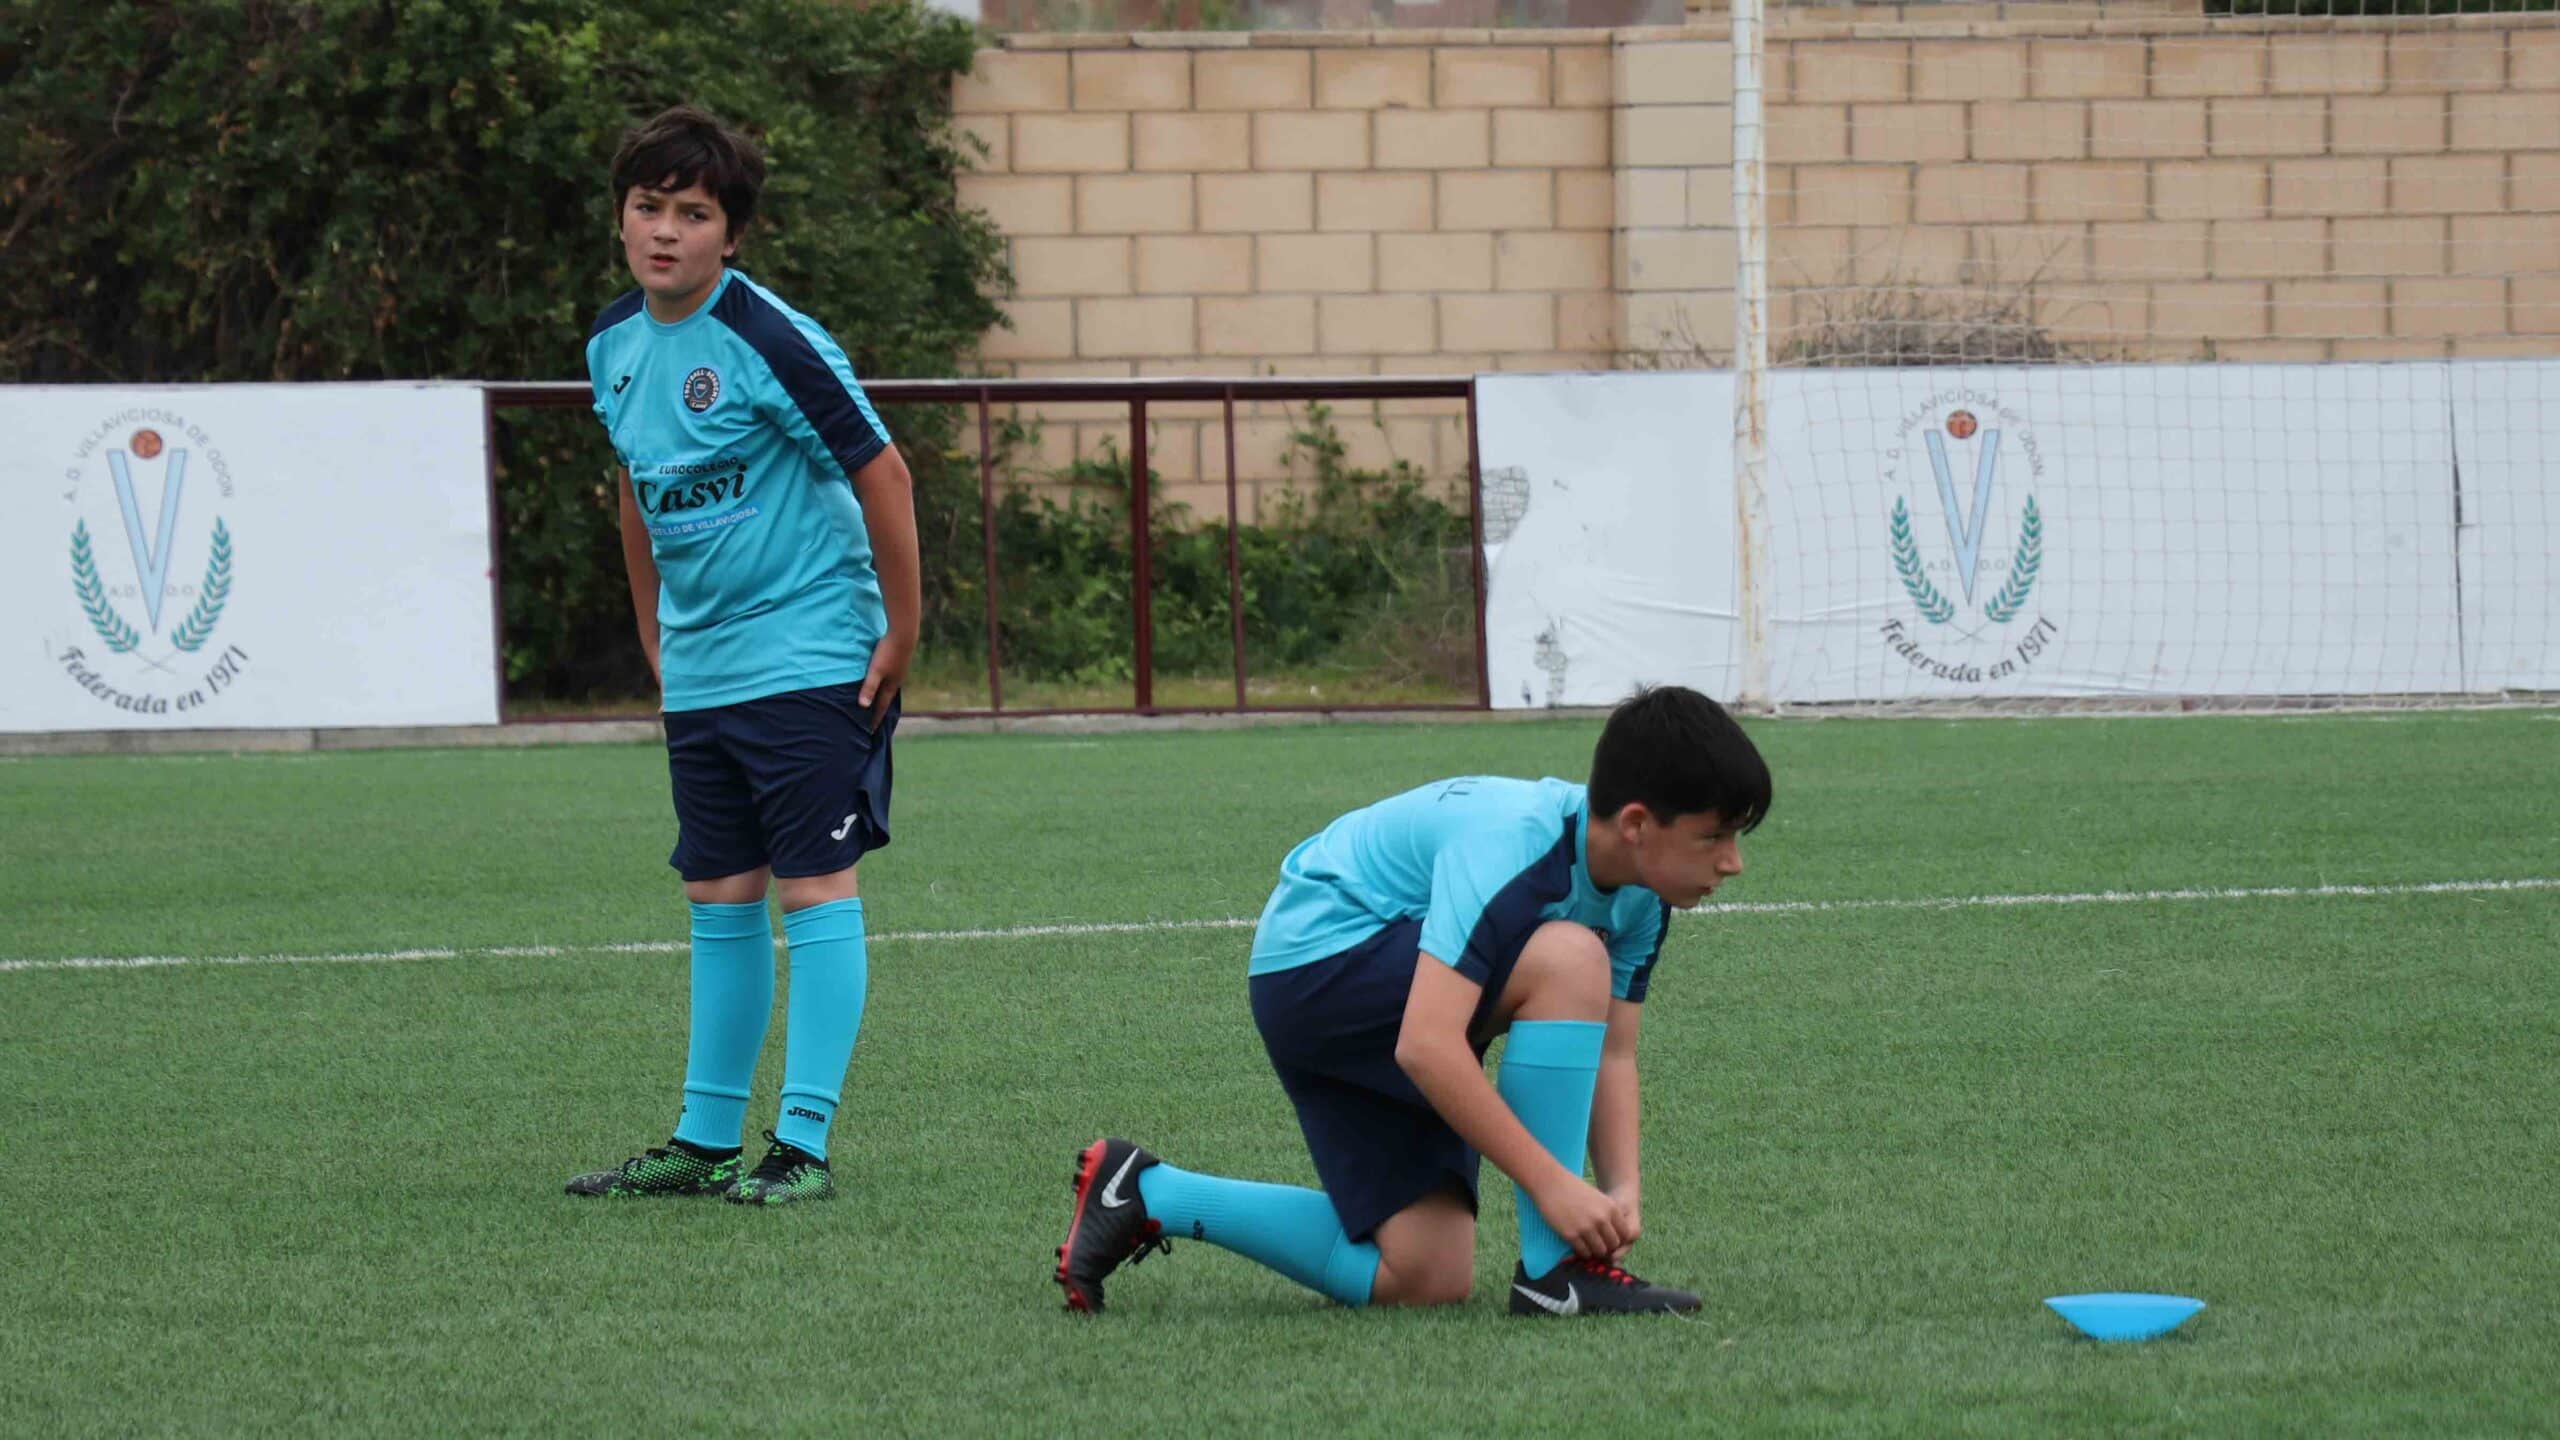 Key benefits of enrolling in Casvi Football Academy